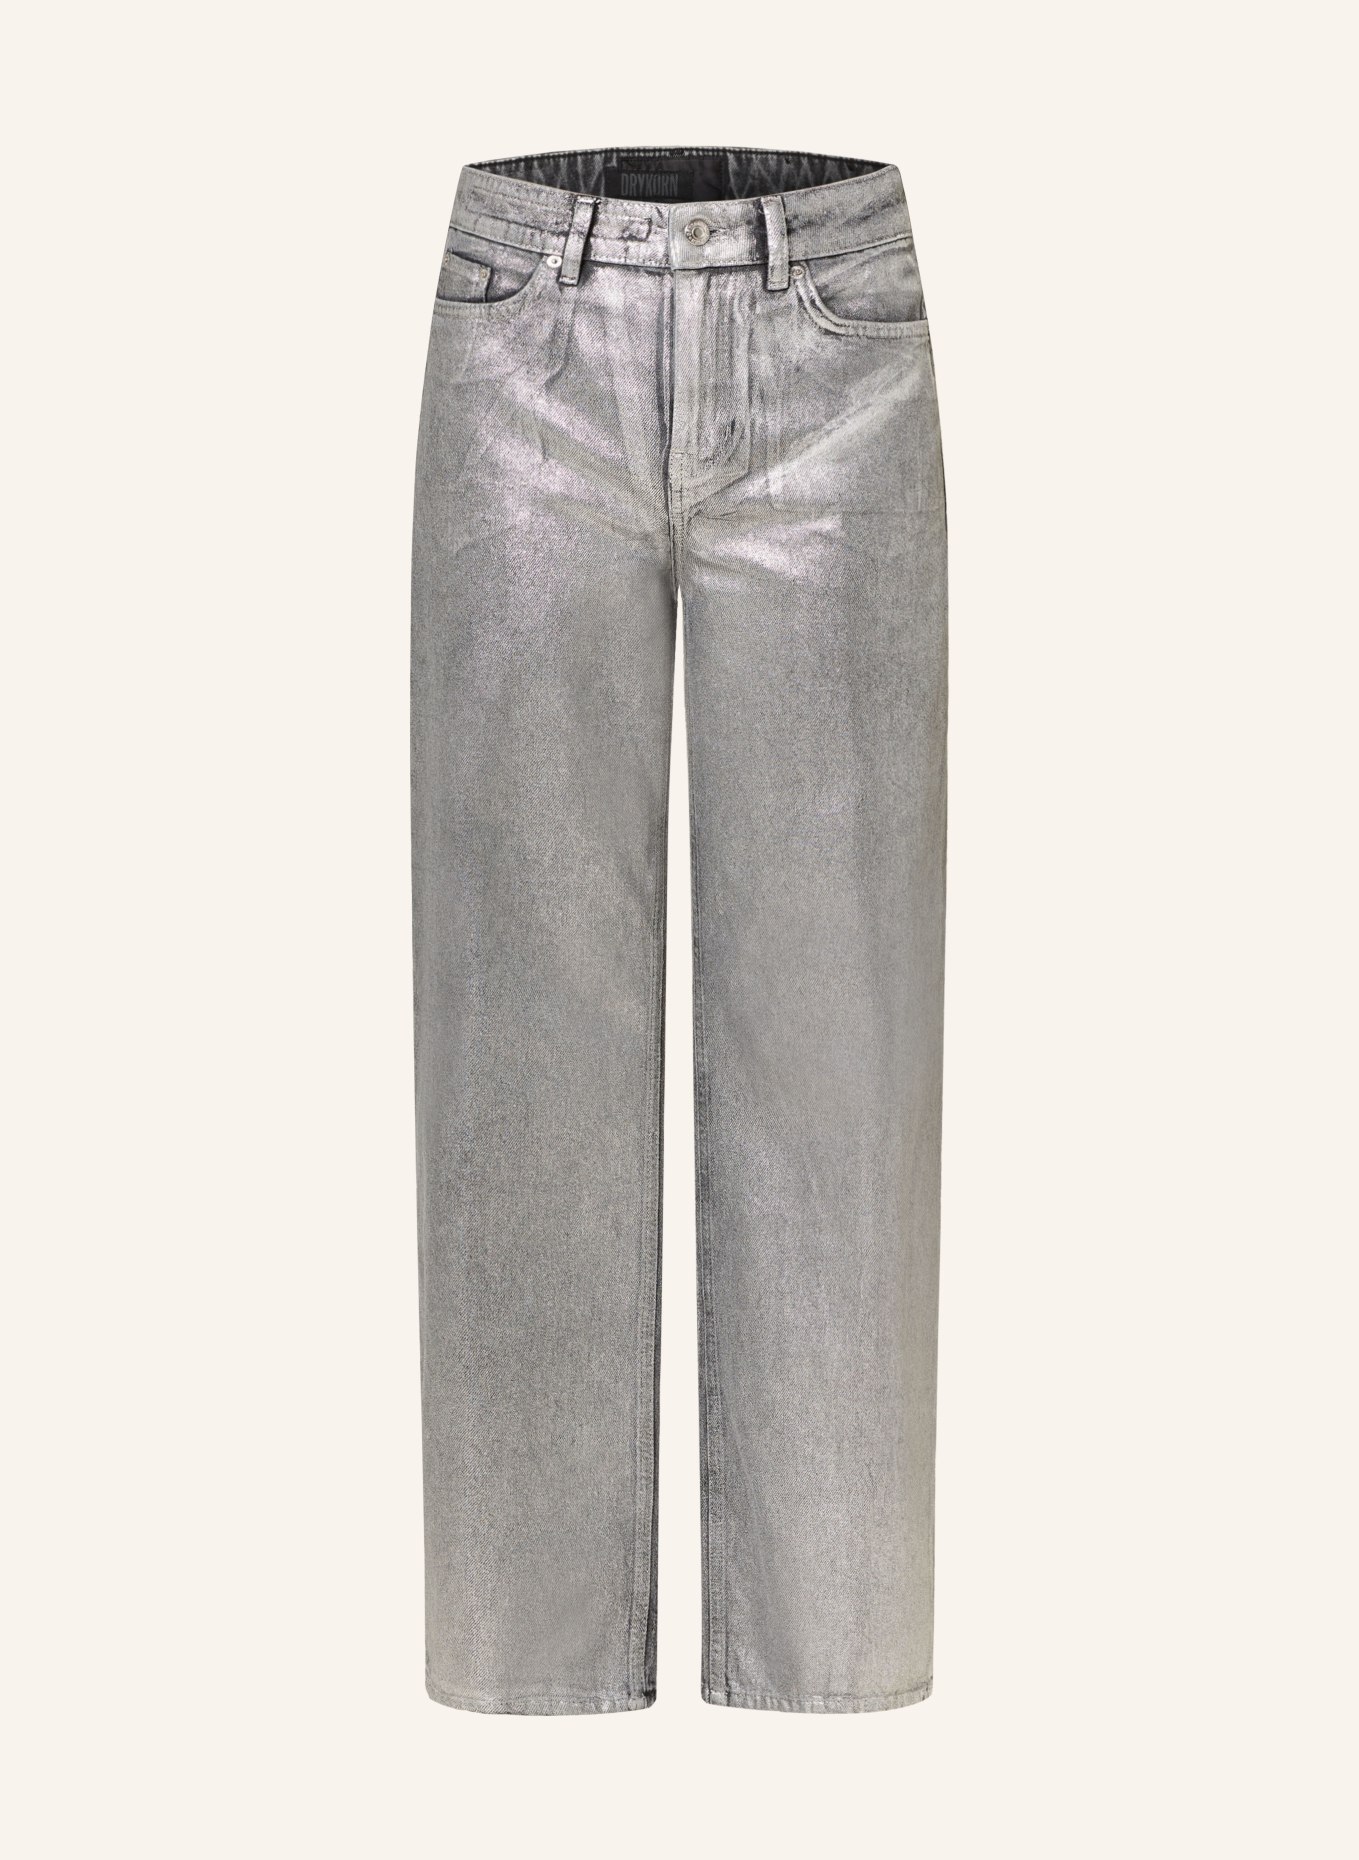 DRYKORN Jeans MEDLEY, Farbe: 9001 silber (Bild 1)